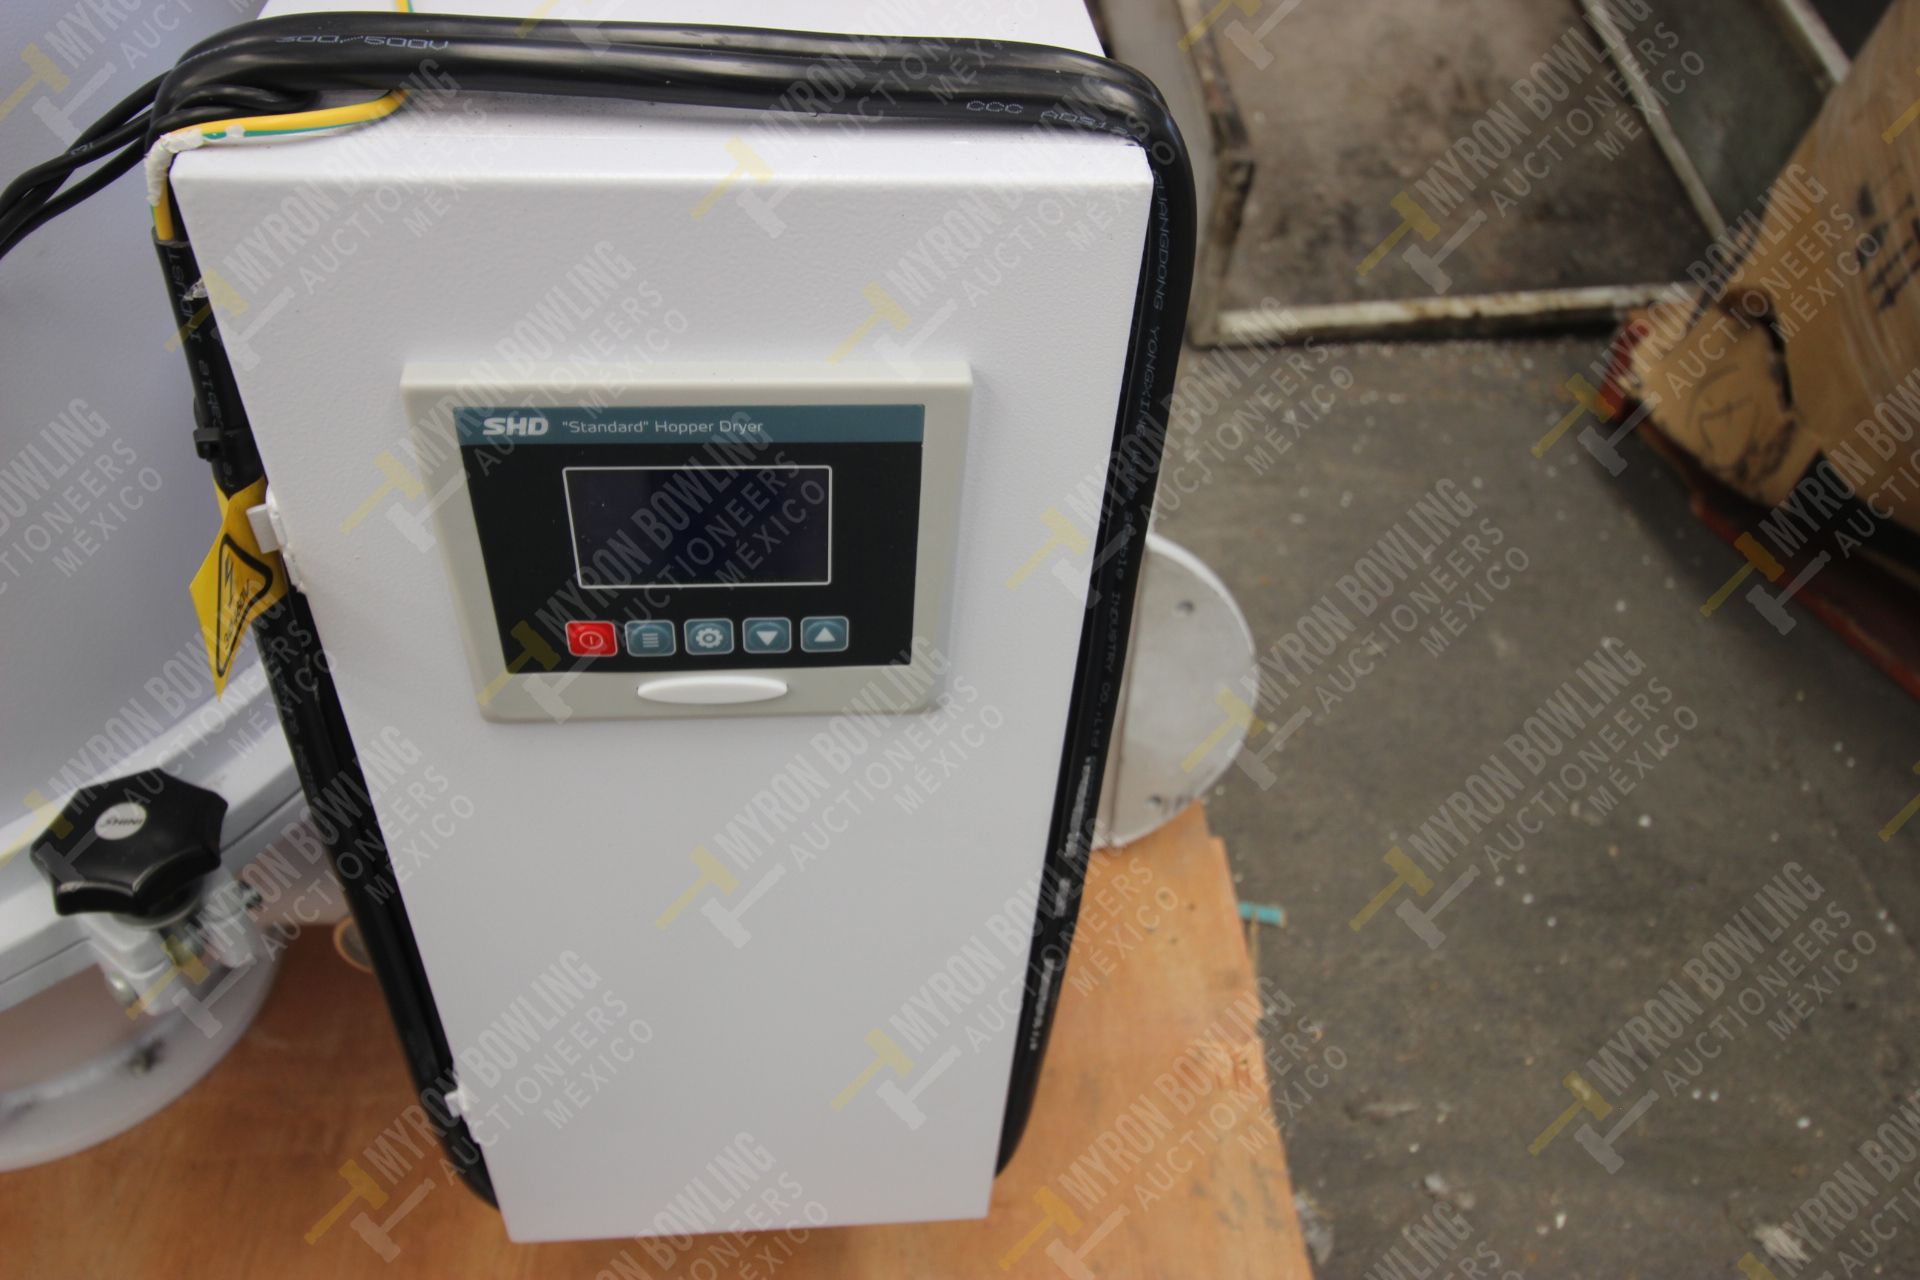 Shini Plastics Technologies 100kg. hopper dryer mod. SHD-100SL-CE, serial number 2HD16100388 - Image 6 of 17